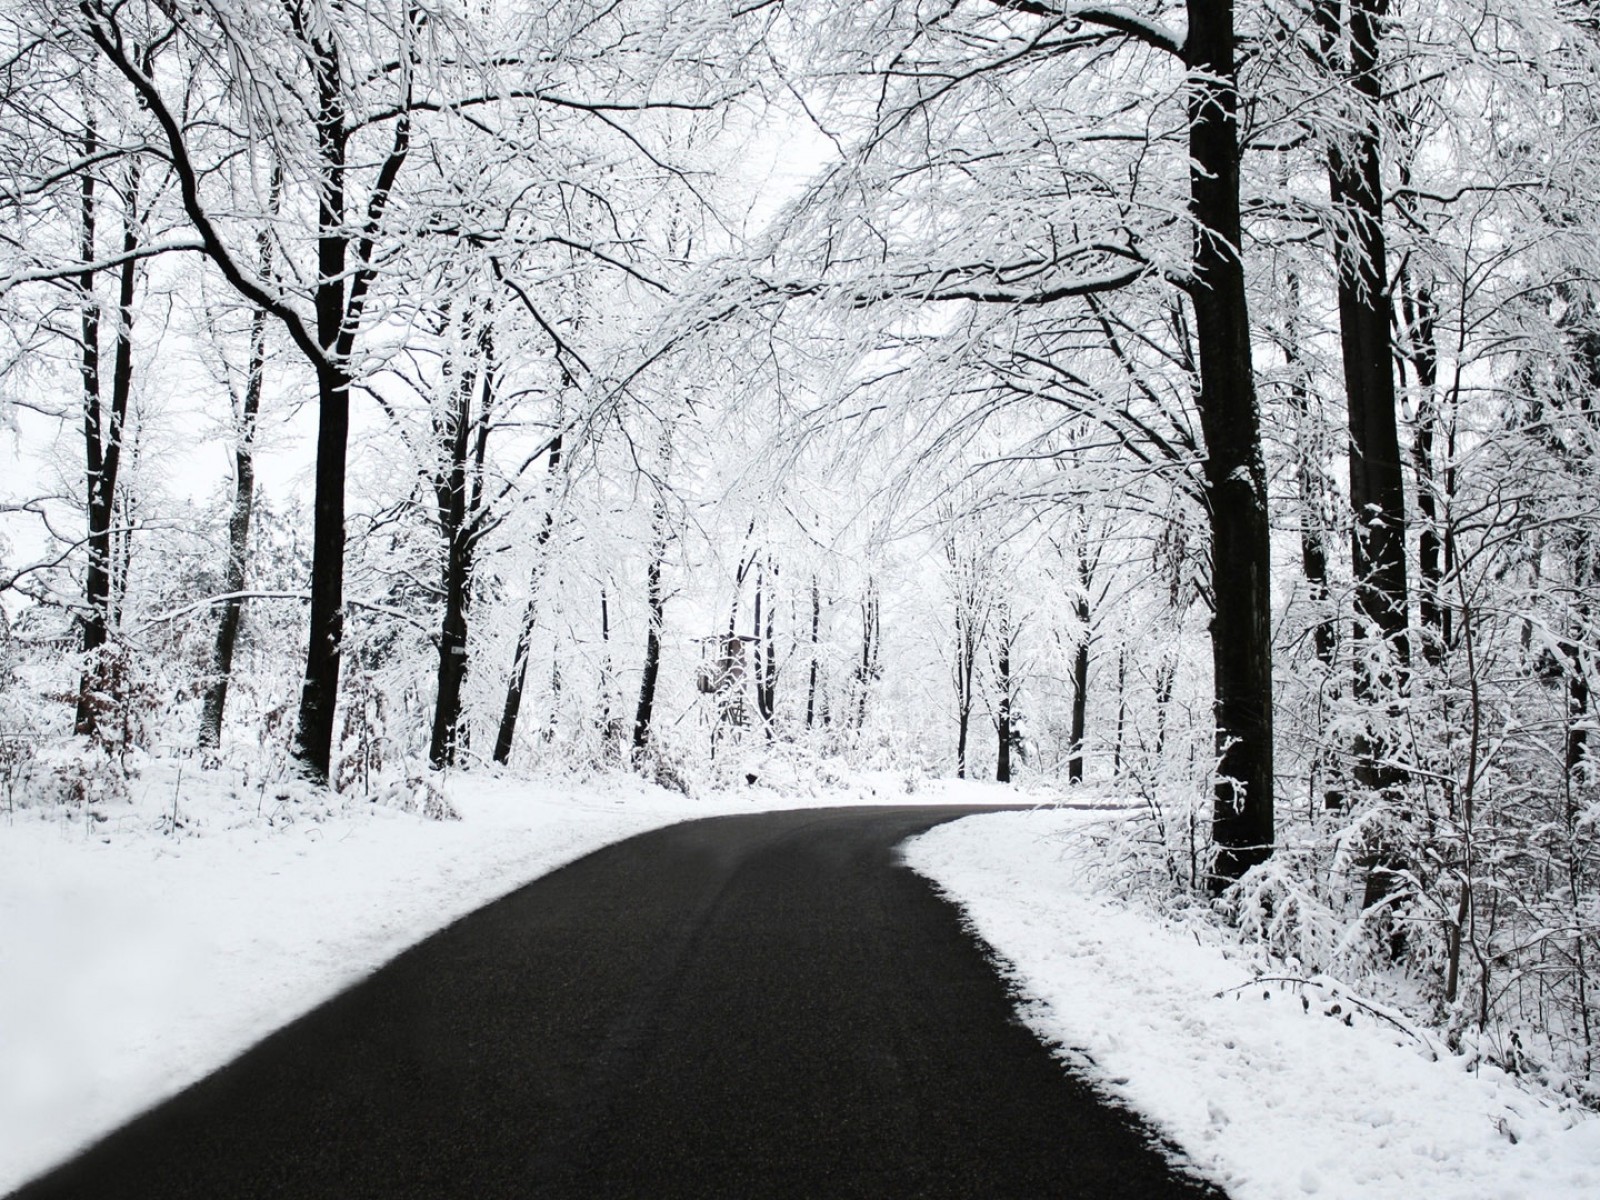 Carretera con nieve alrededor